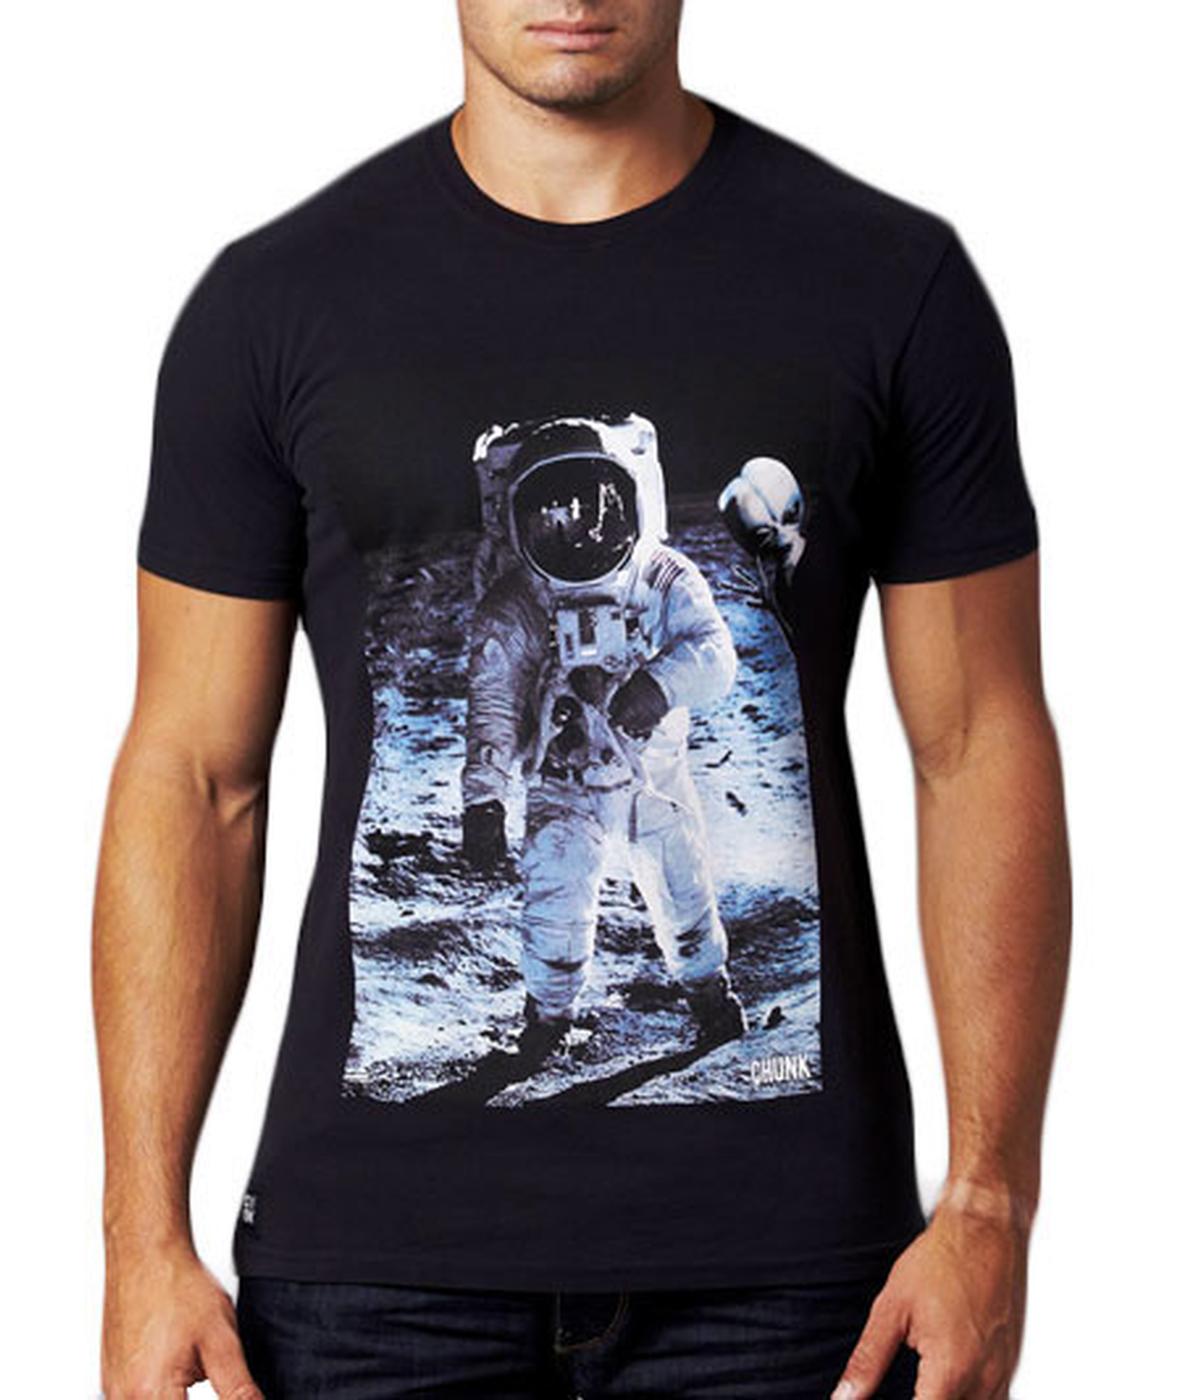 Alien Space Bomb CHUNK Retro 1960s Print T-Shirt